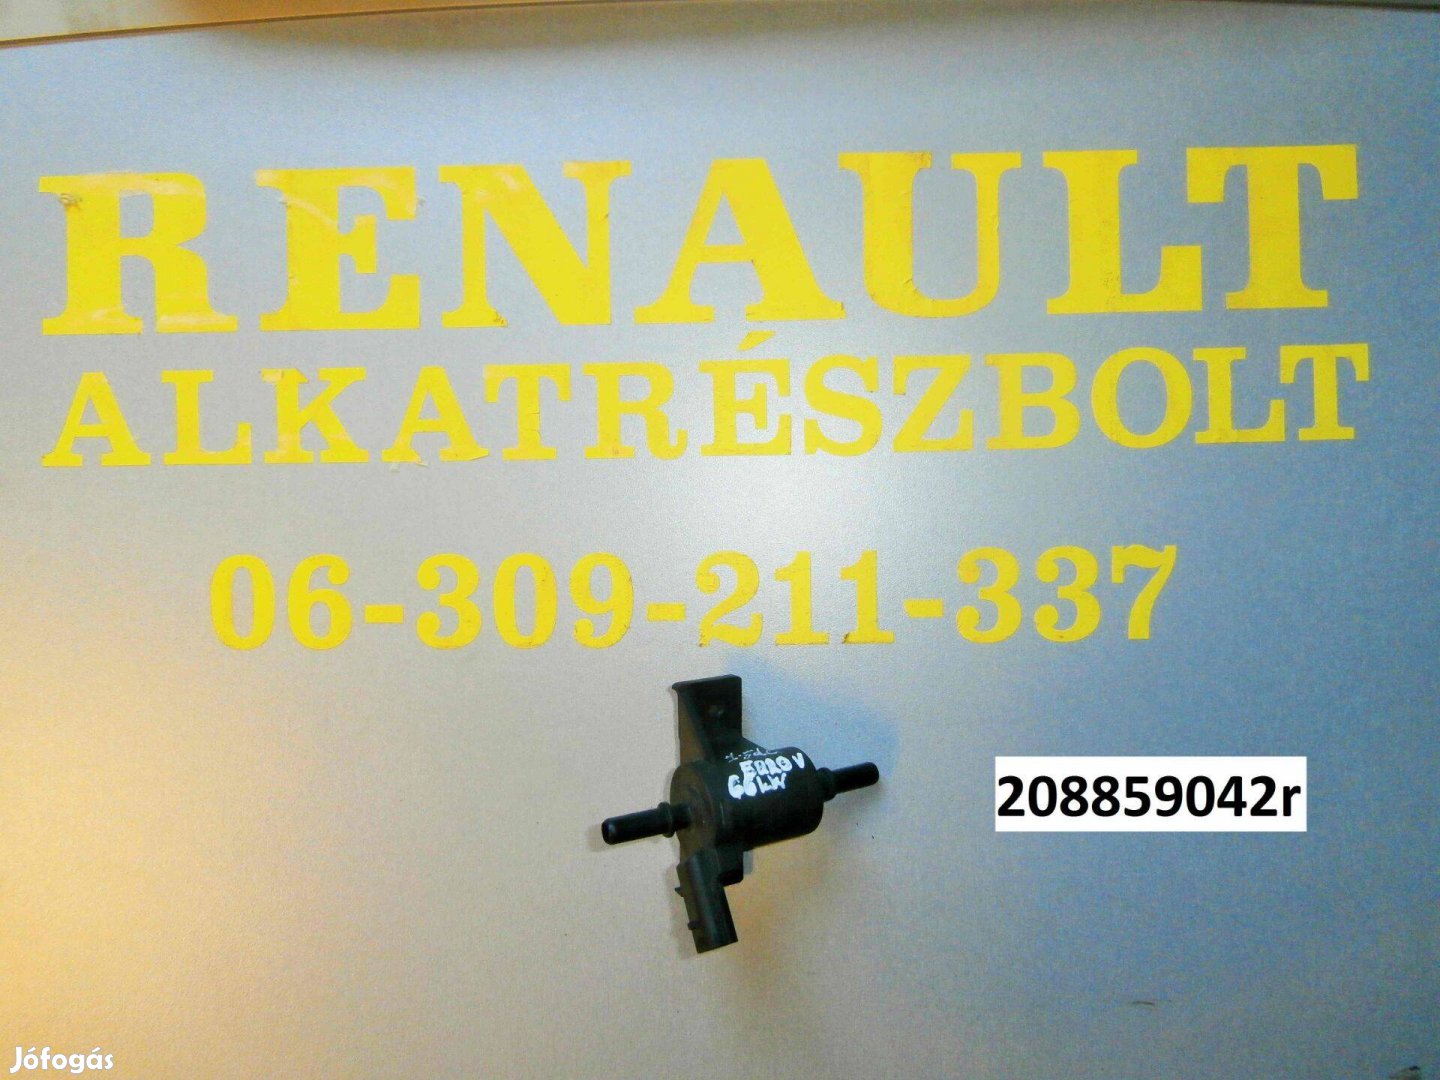 Renault 1.5 dci elektromos szelep 208859042r